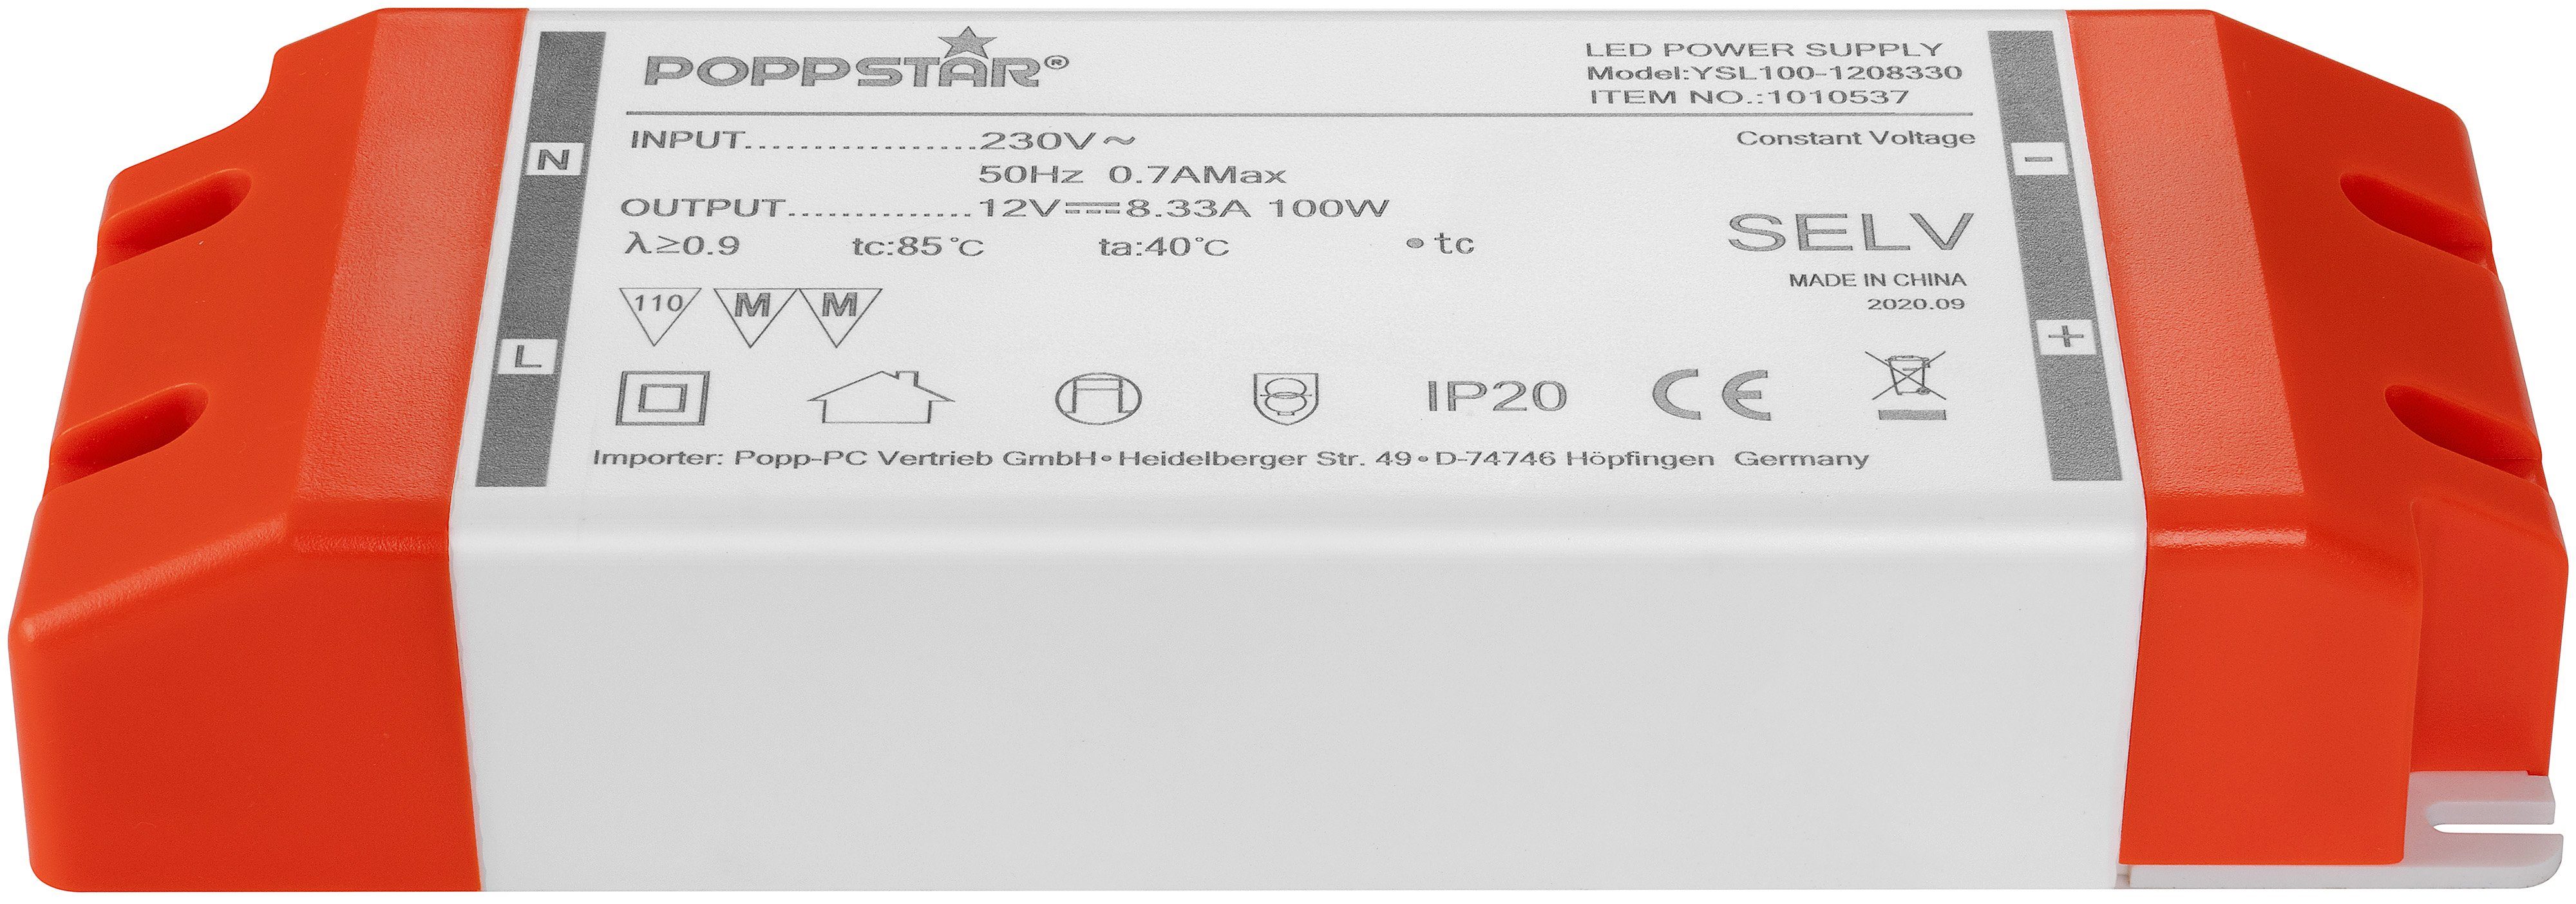 Trafo Watt für Transformator LED (12V Poppstar 1W DC LED 100 230V bis / LEDs) Trafo AC 8,33A 12V